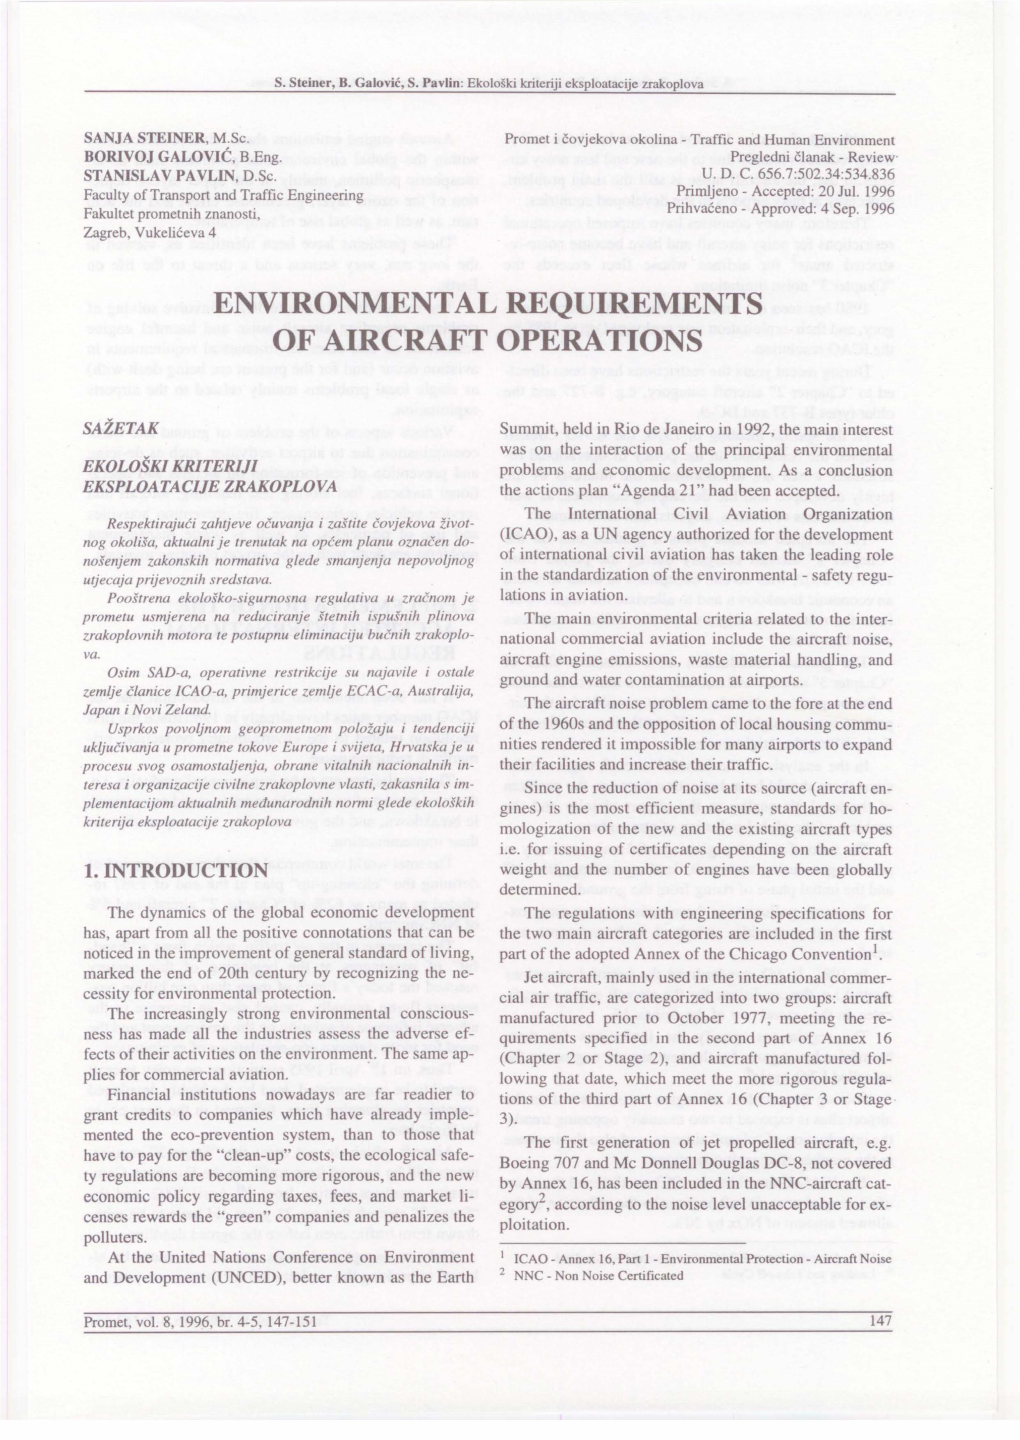 Environmental Requirements of Aircraft Operations